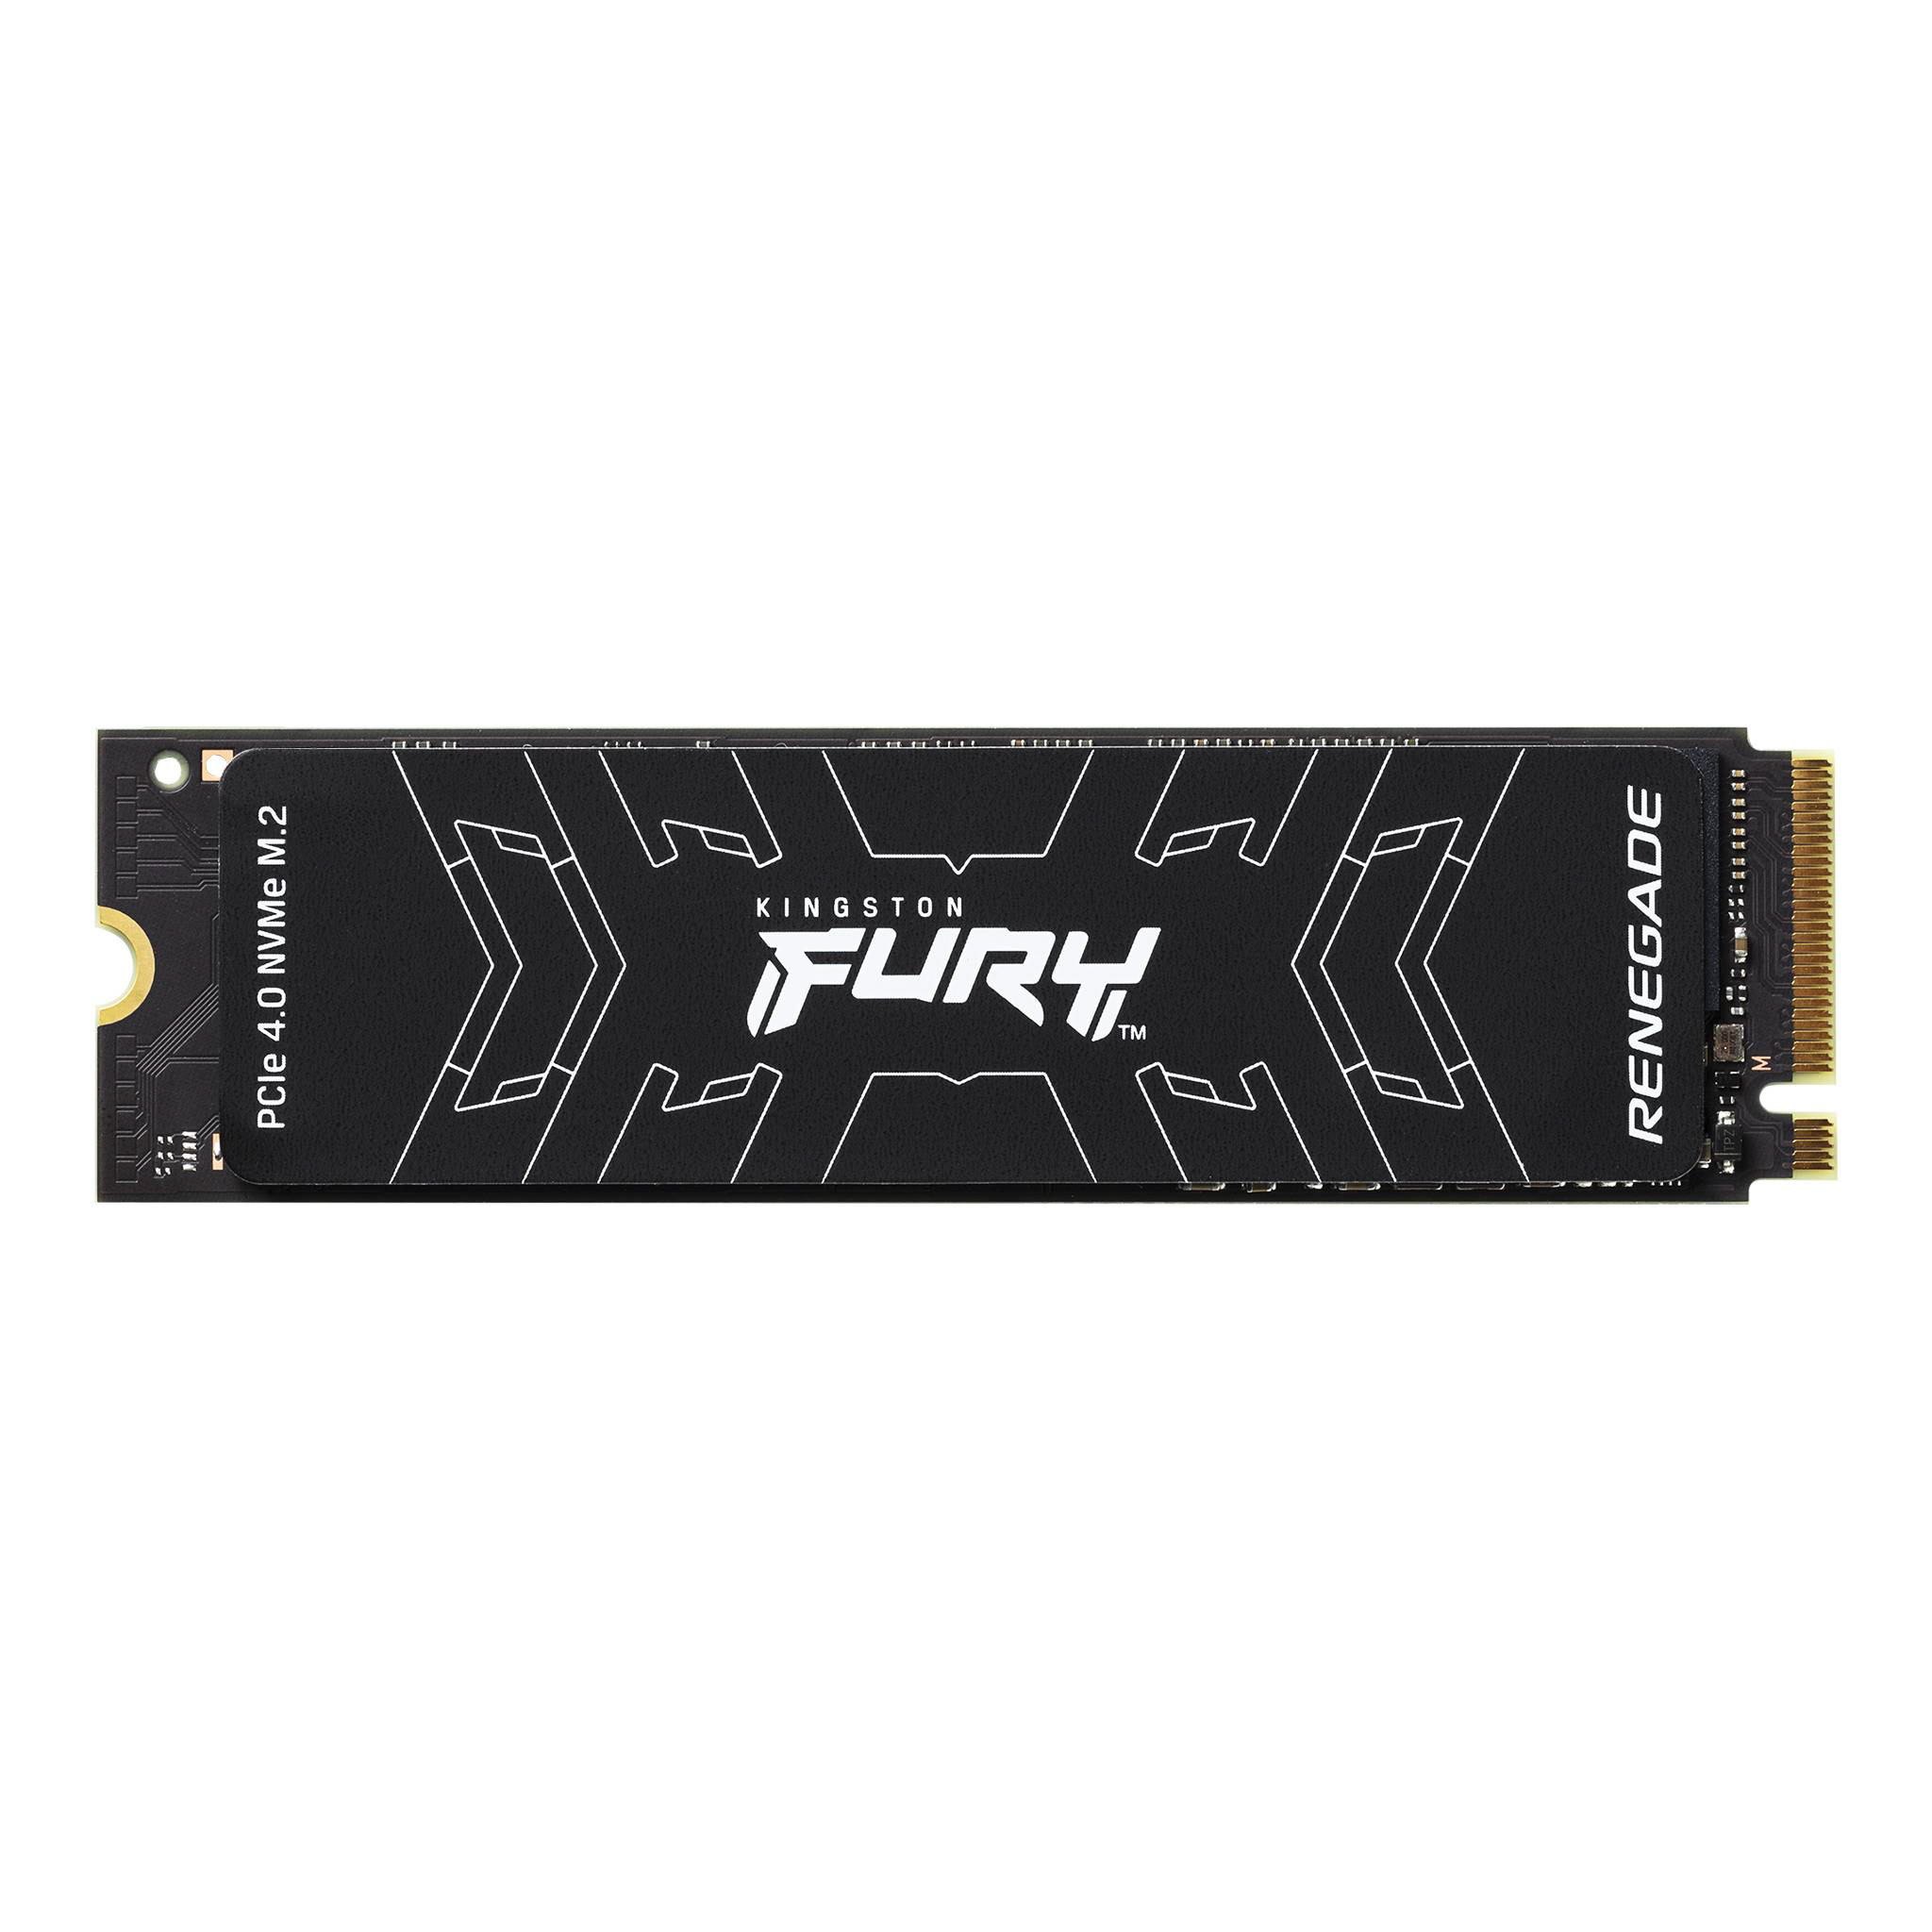 1000GB SSD Kingston Fury M.2 PCIe 4.0 NVMe